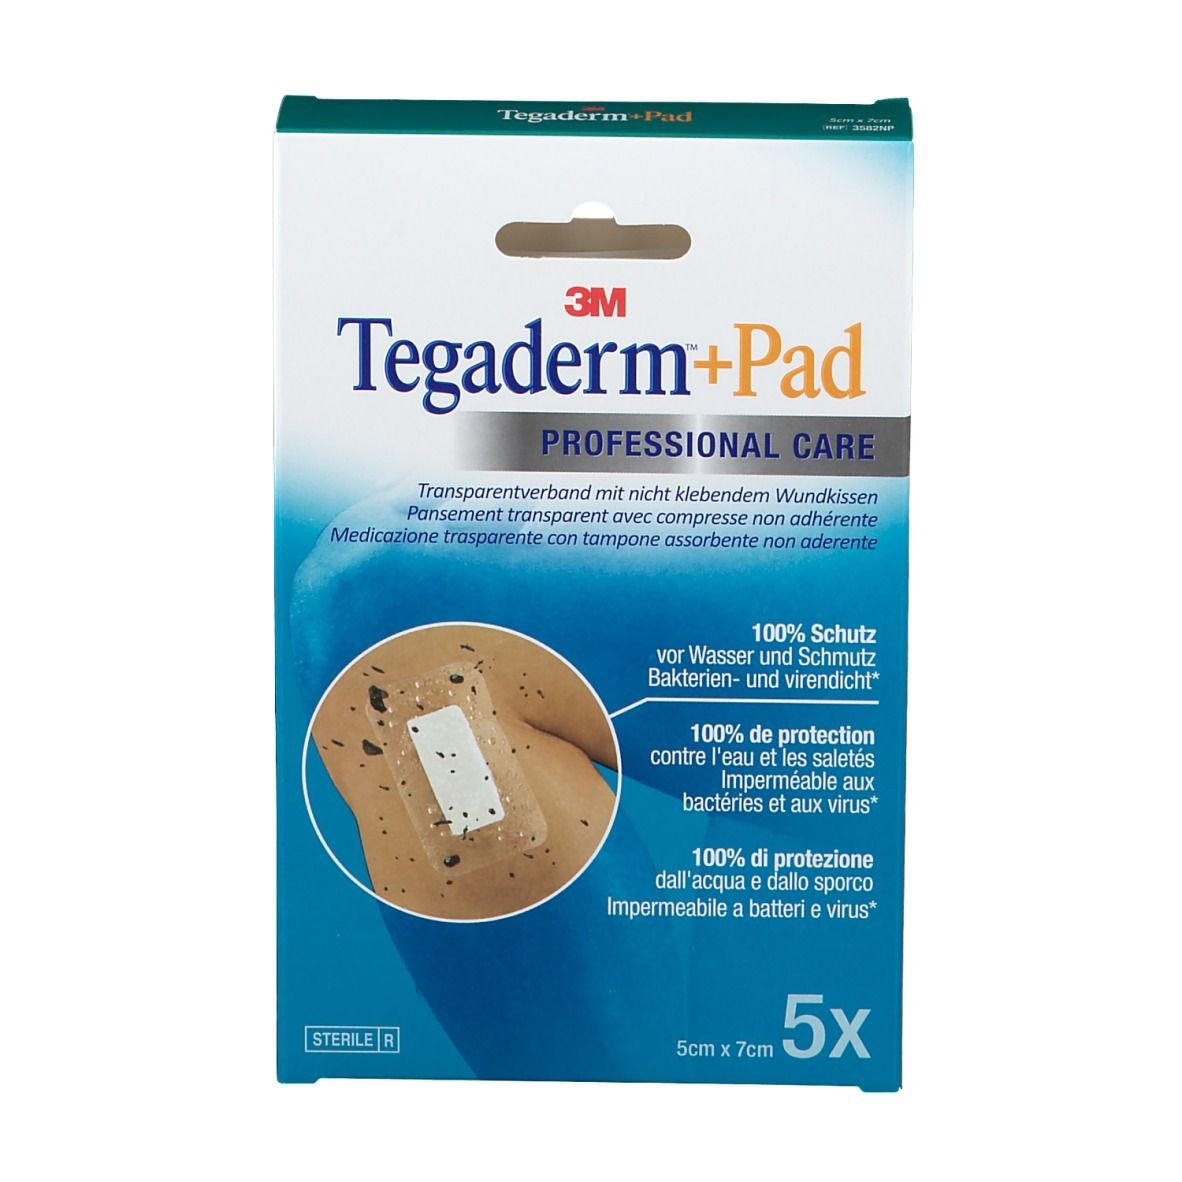 3M™ Tegaderm™ + Pad Transparentverband mit absorbtionsfähiger Wundauflage